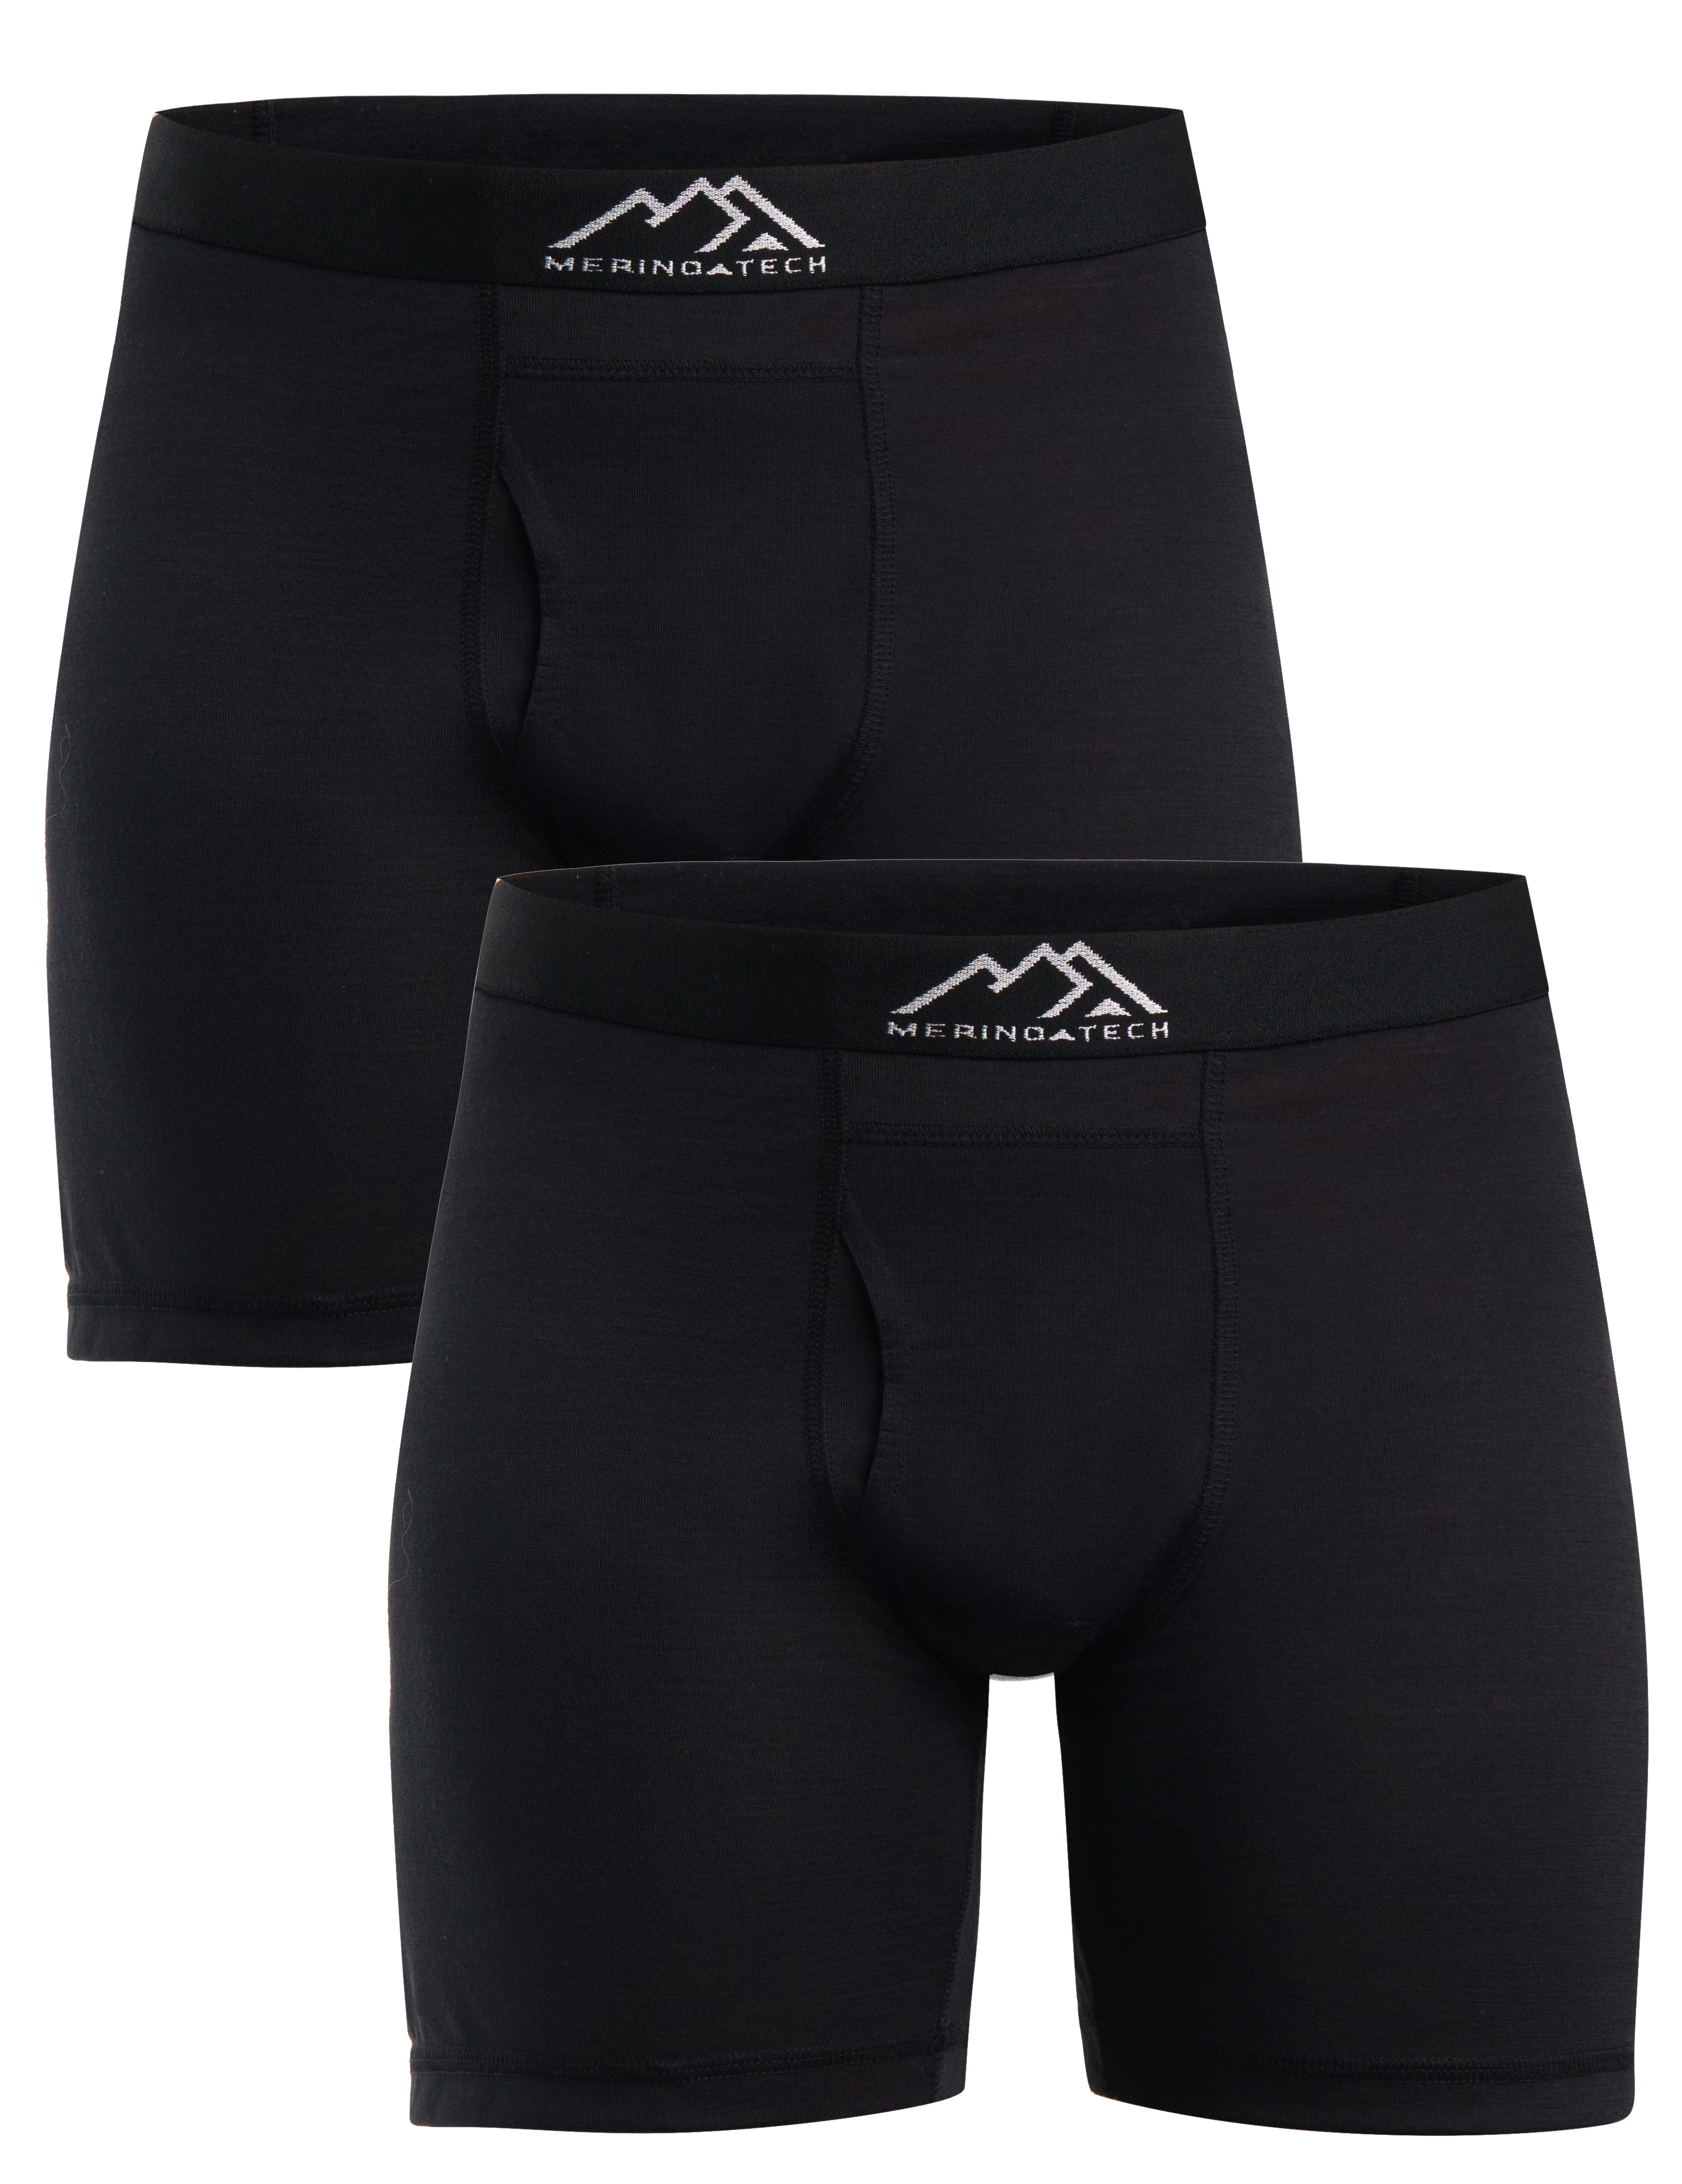 MERIWOOL Merino Wool Men's Boxer Brief Underwear - Black 